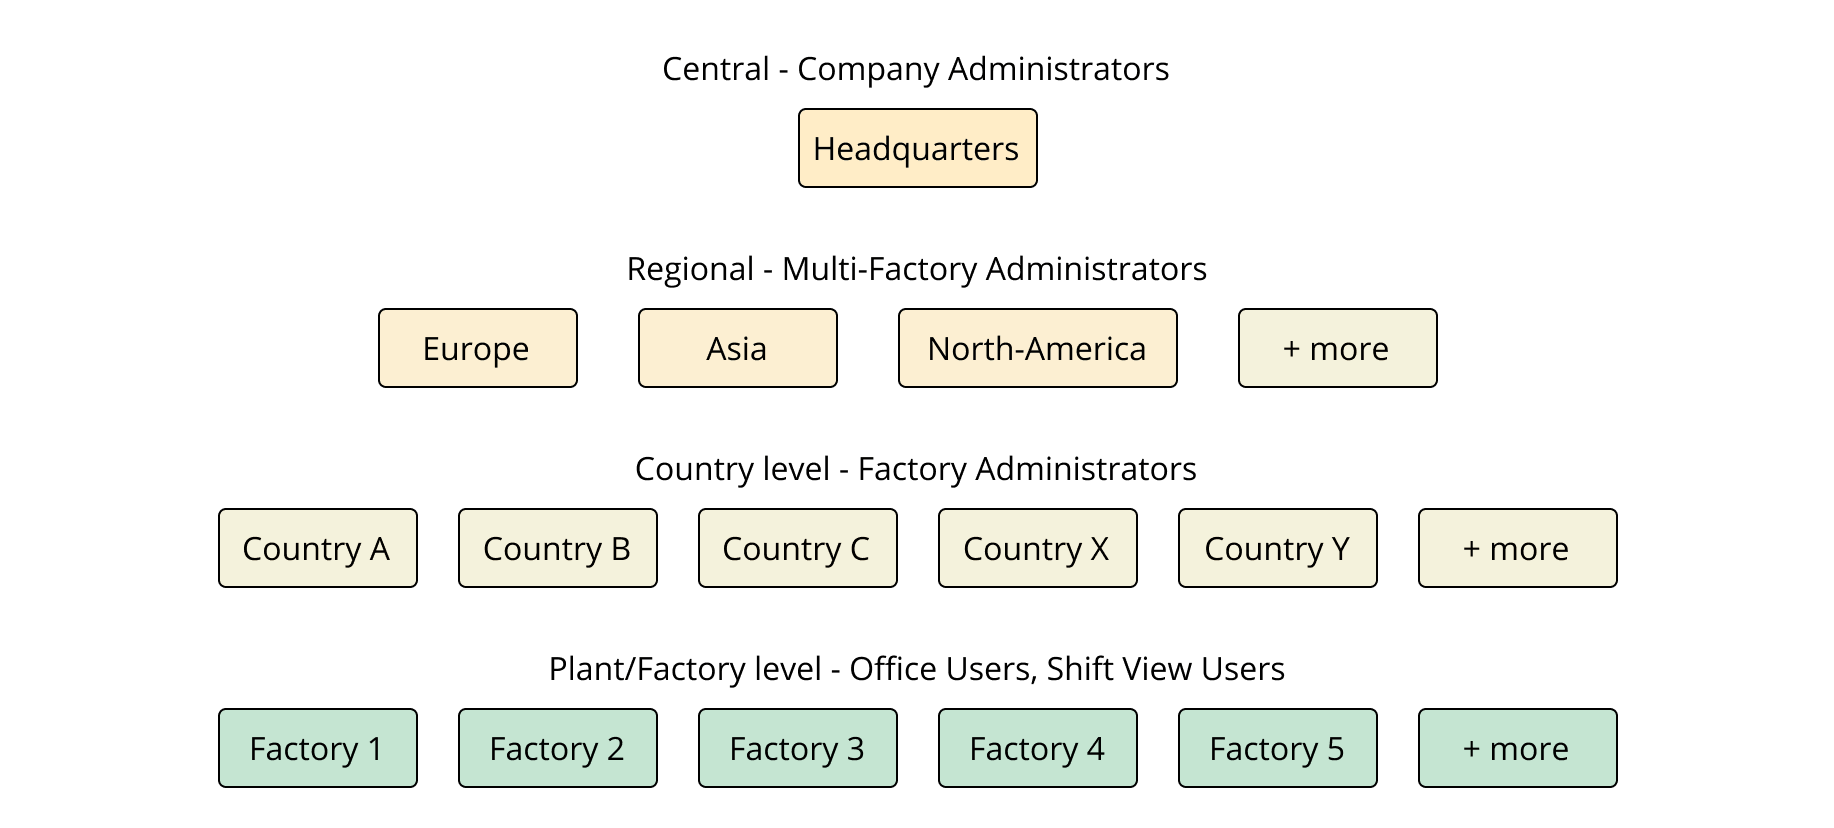 Evocon user roles for multinational companies